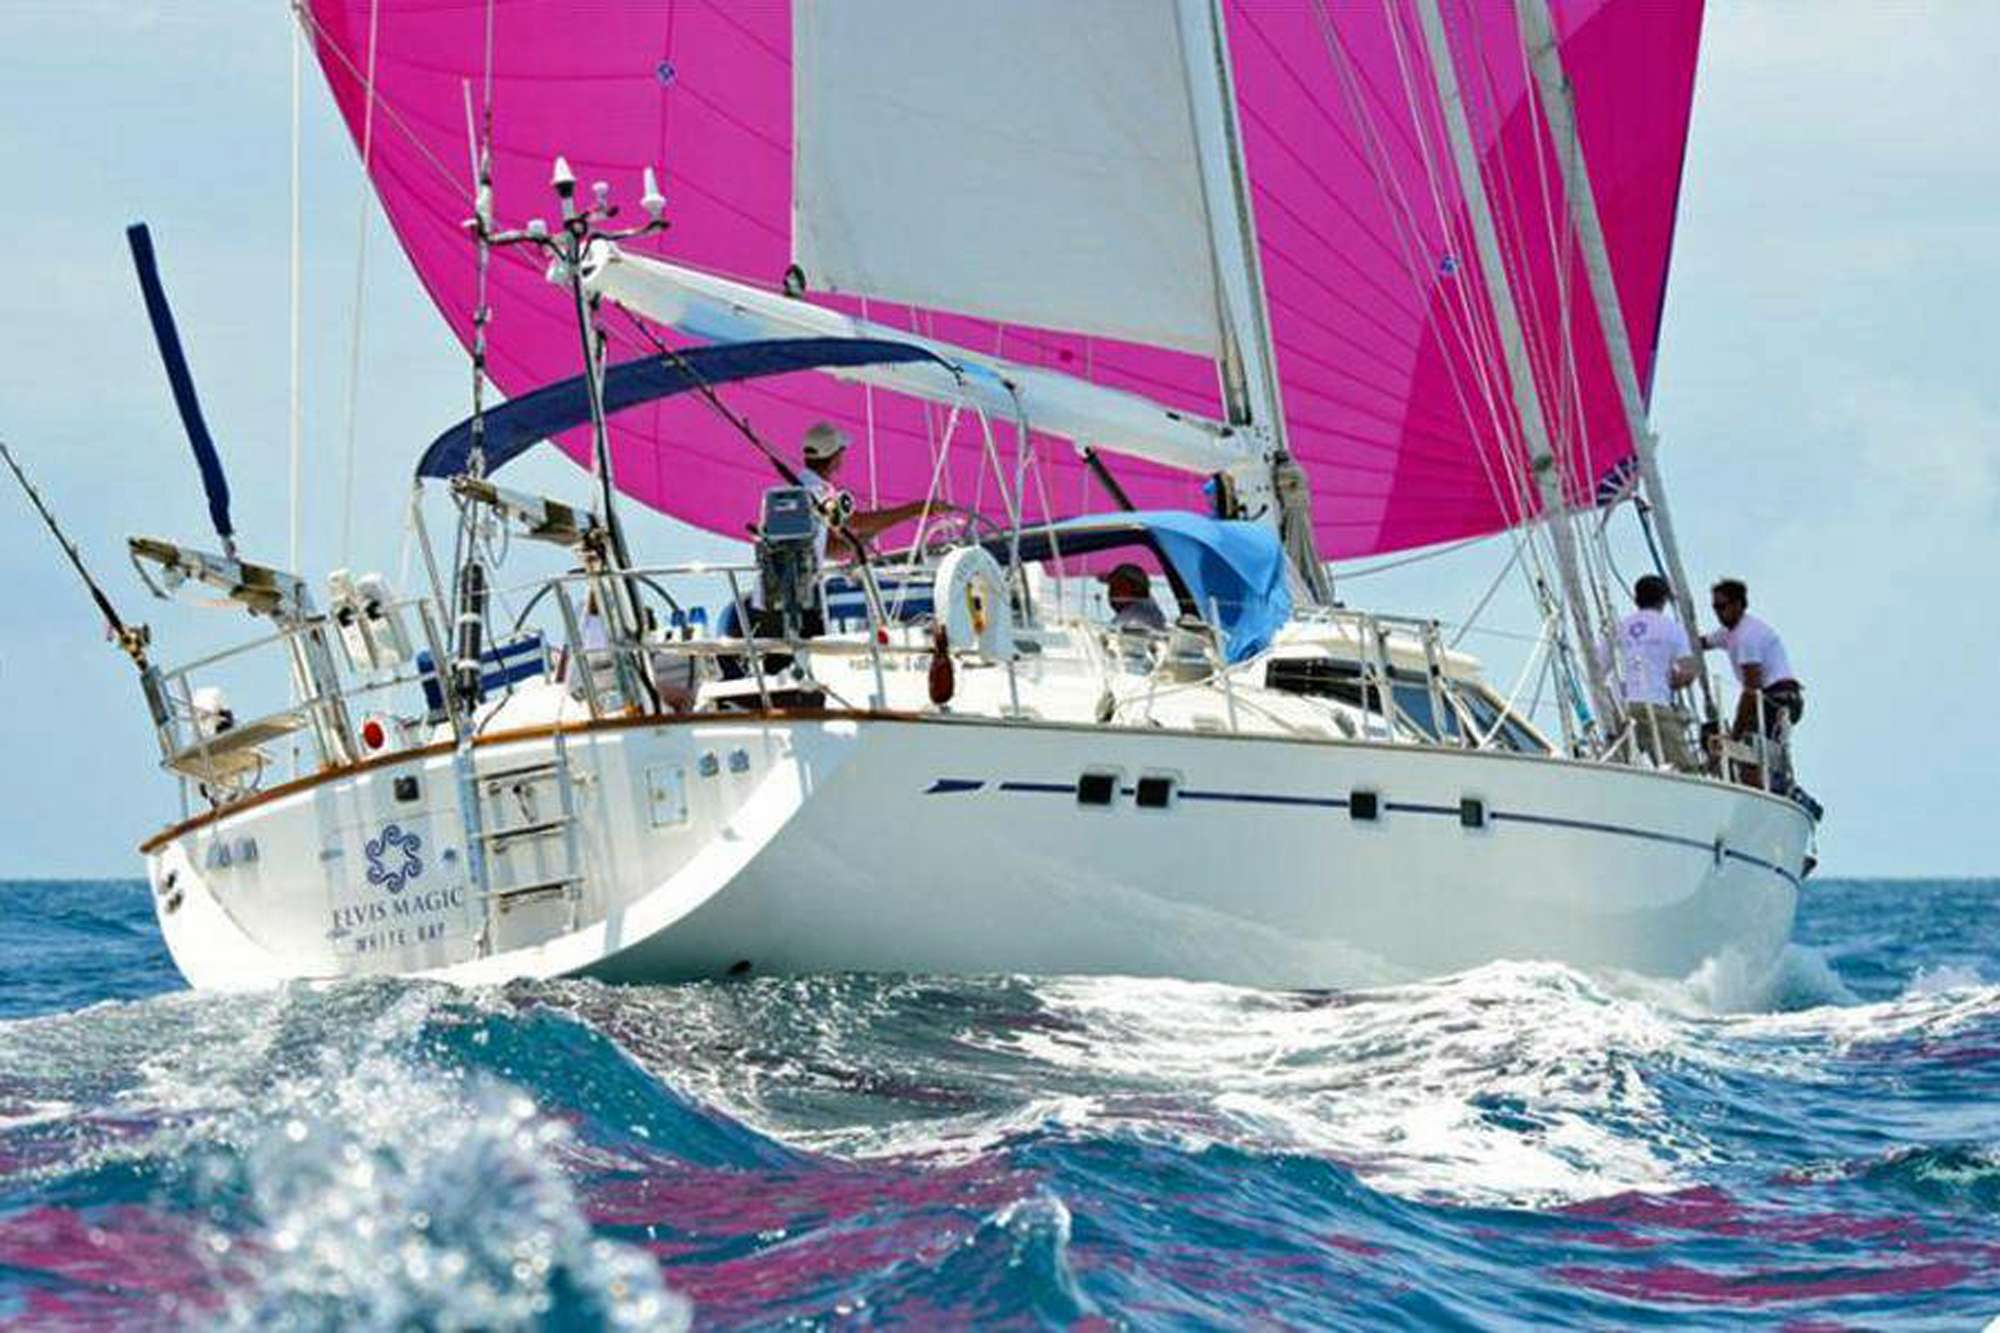 ELVIS MAGIC Yacht Charter - Caribbean Beaches and blue seas